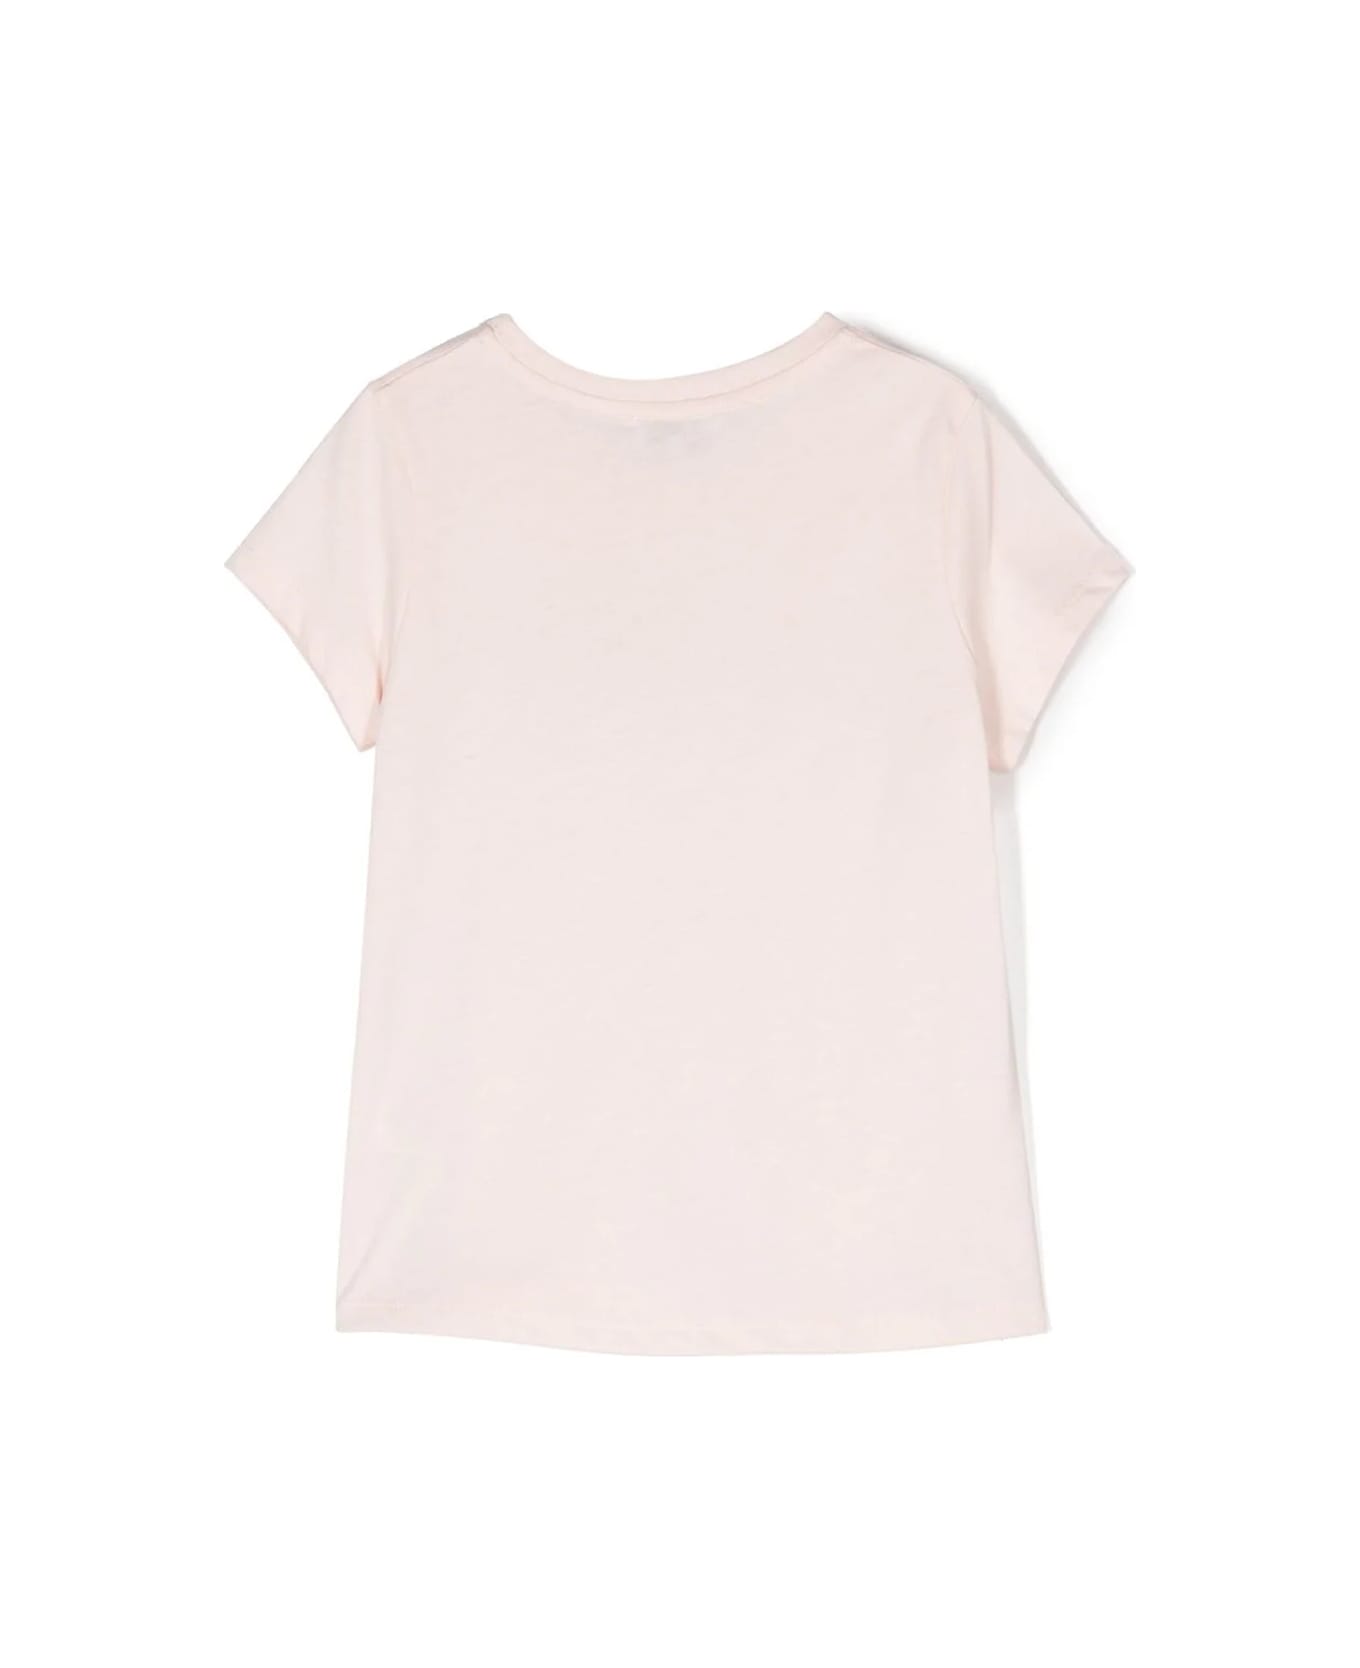 Lanvin Logo T-shirt - C Rosa Antico Tシャツ＆ポロシャツ